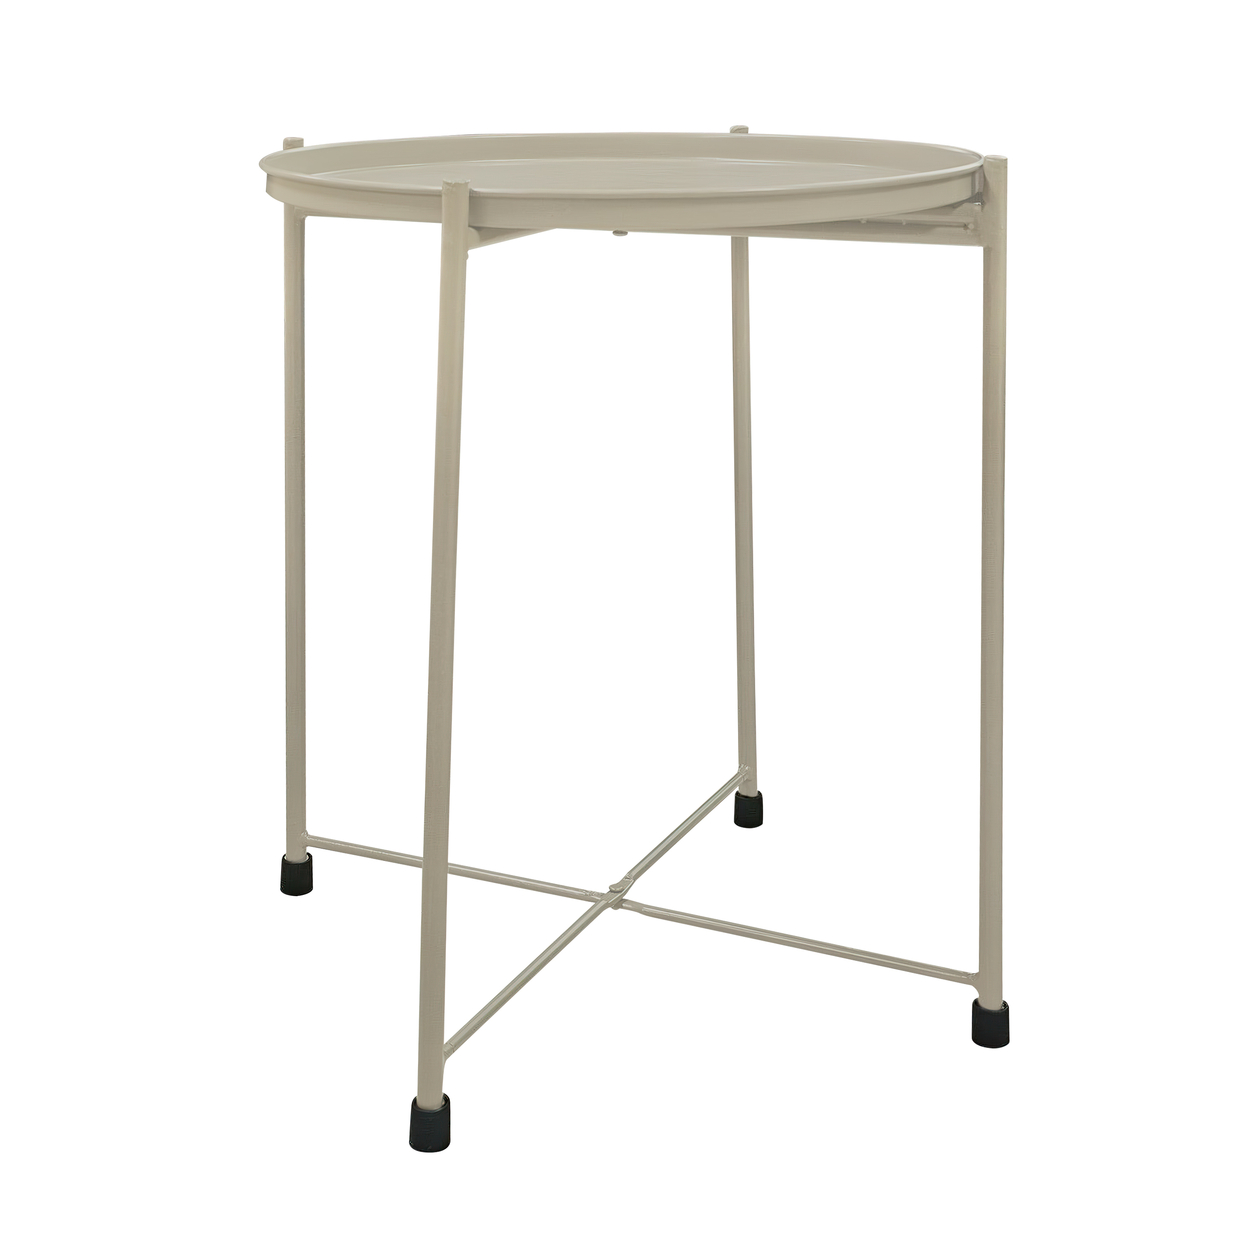 18 Inch Modern Side End Table, Round Metal Tray Top, Foldable Legs, Beige - Saltoro Sherpi